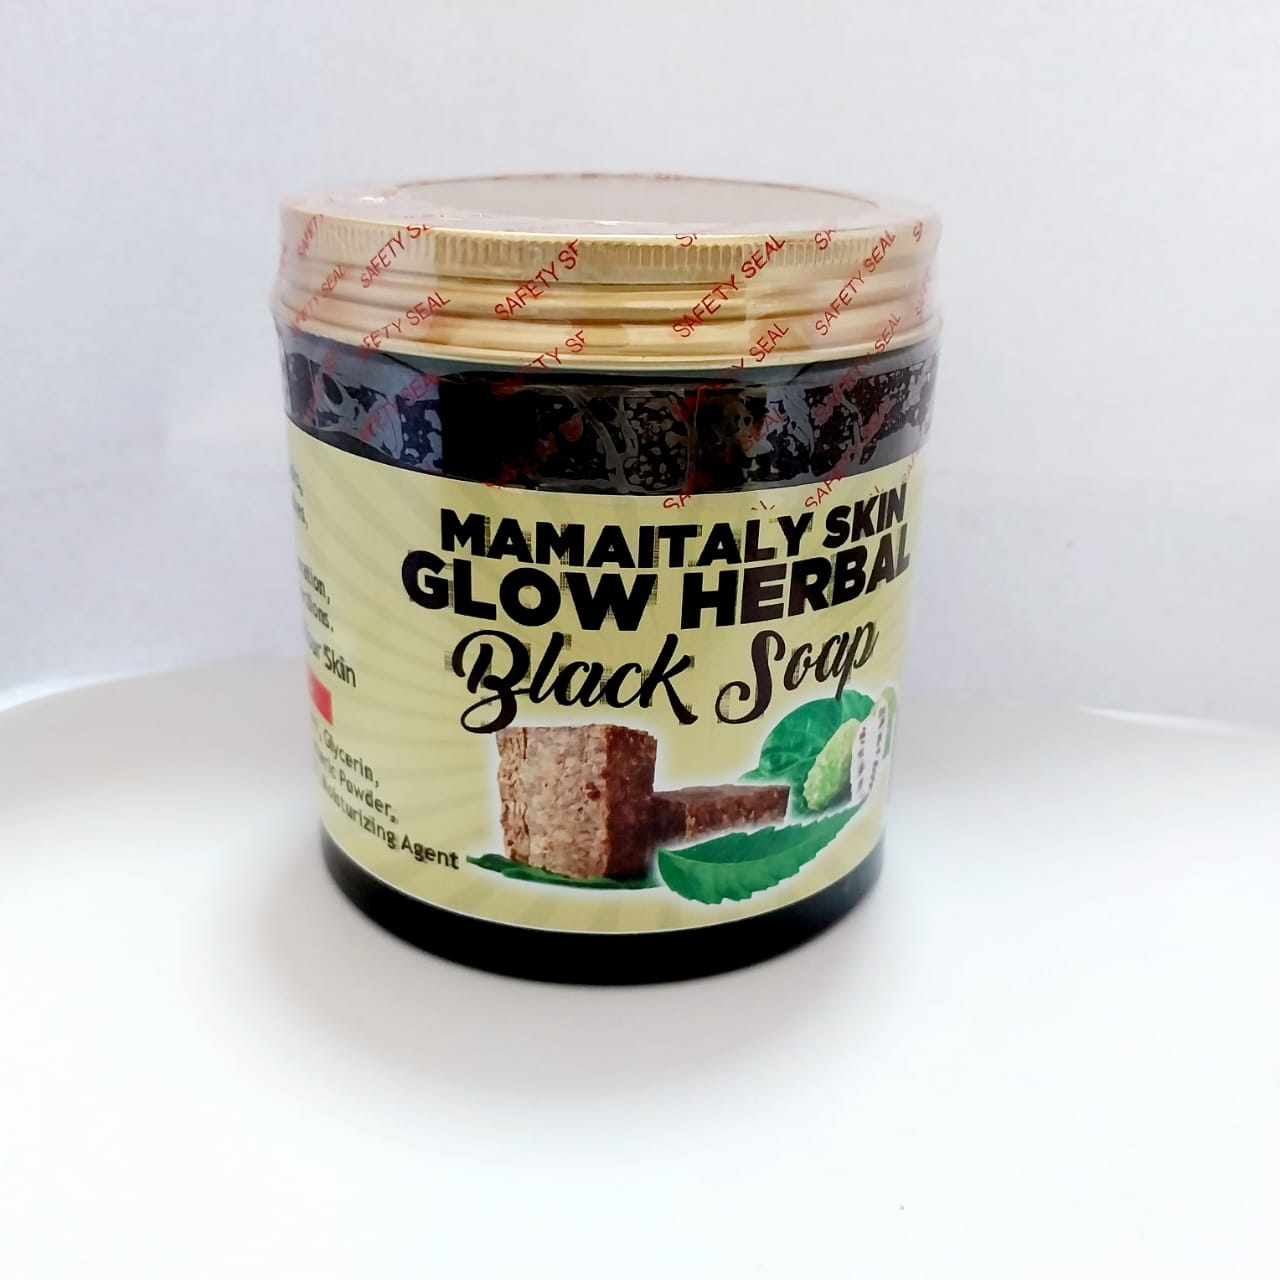 MamaItaly Skin Glow Herbal Black soap